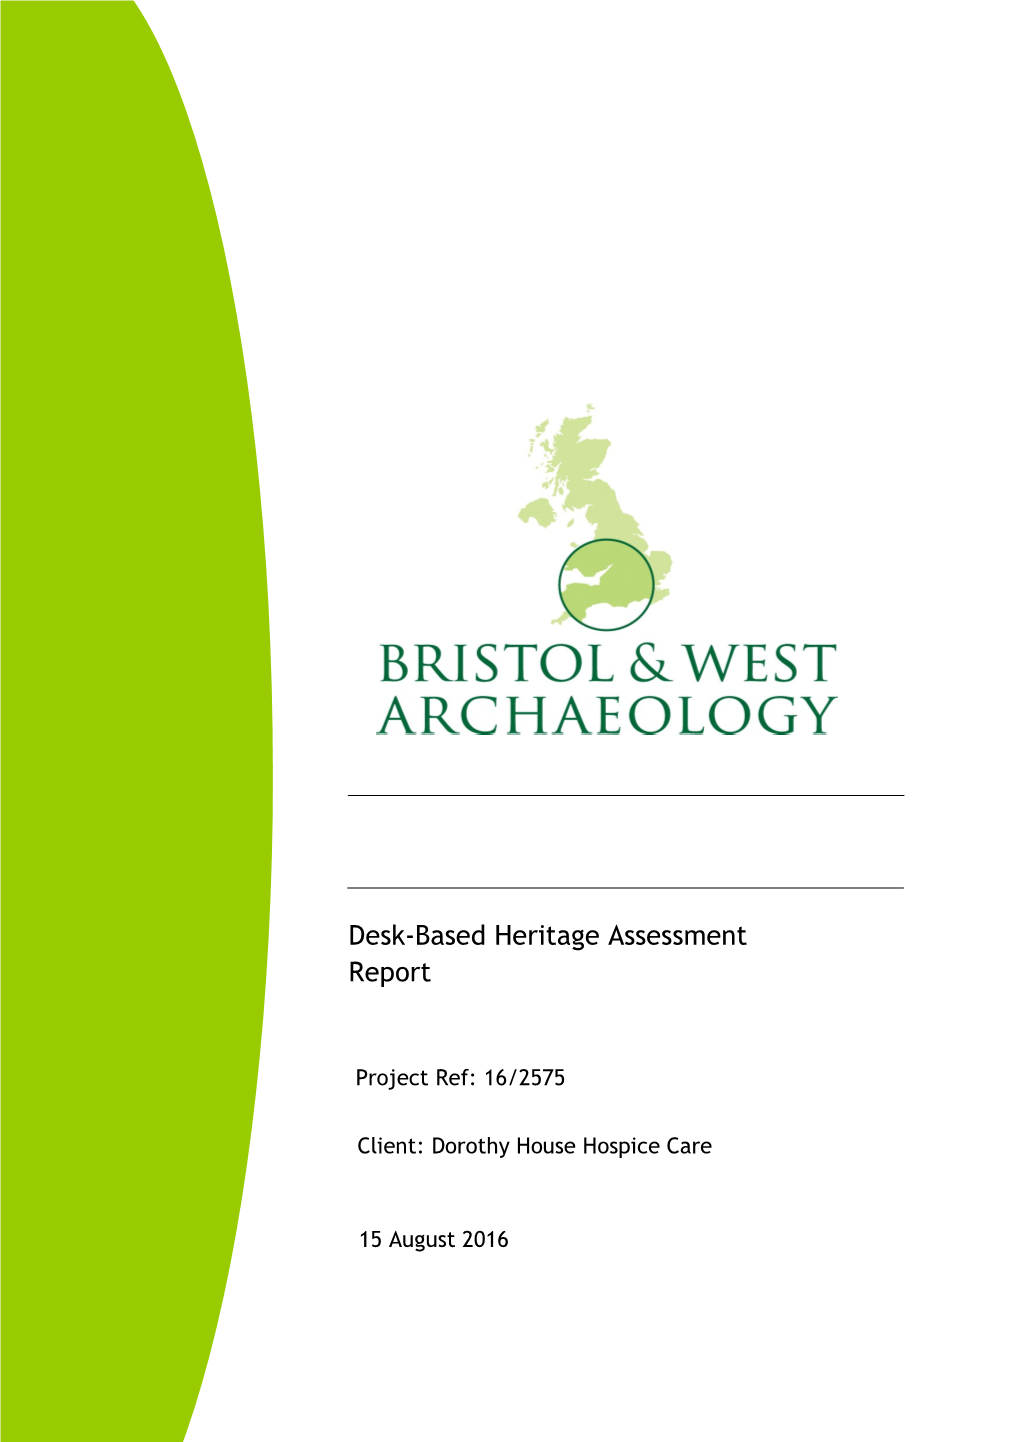 Desk-Based Heritage Assessment Report